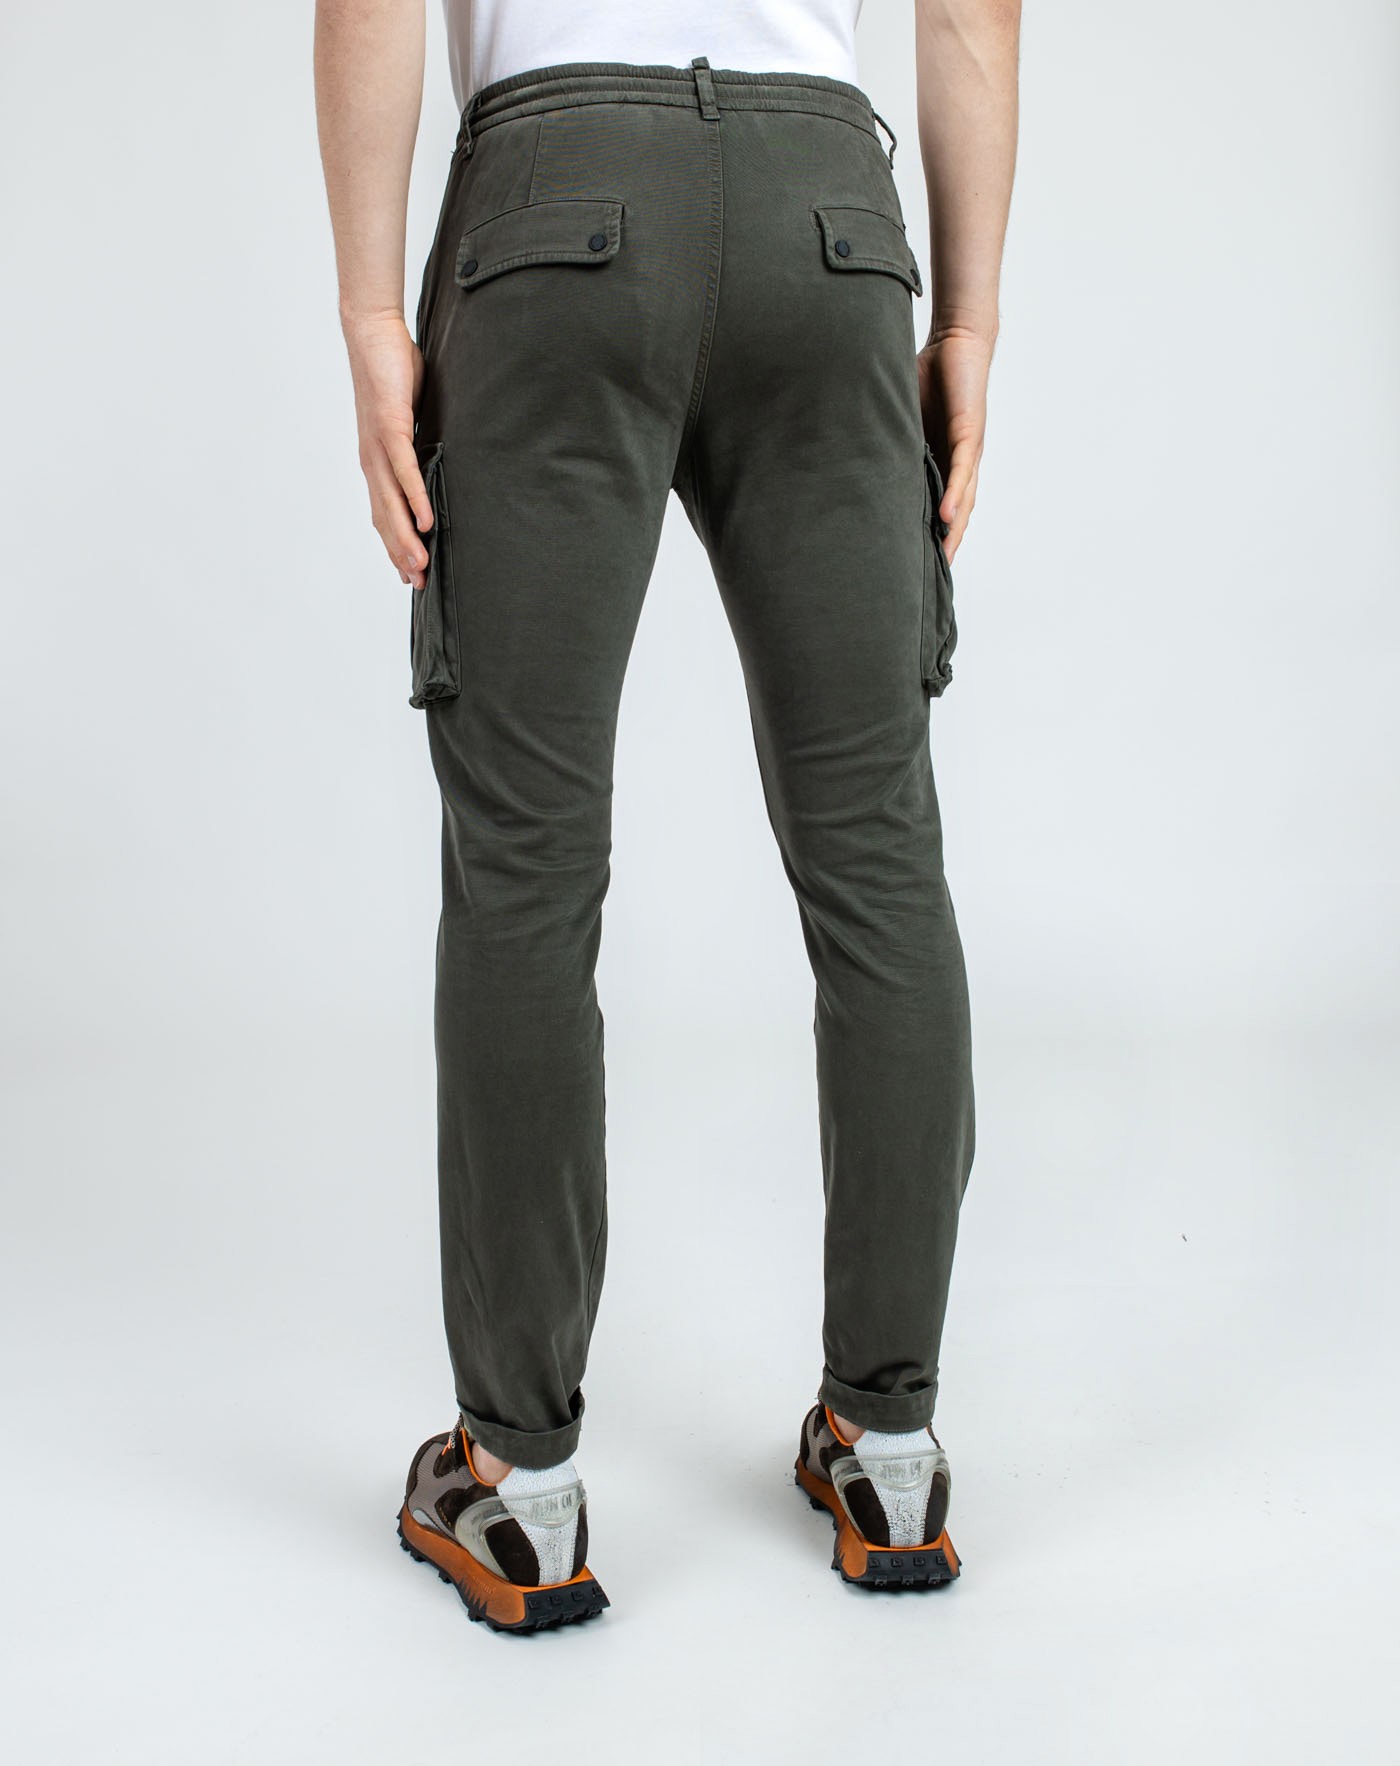 masons-pantalon-chile-jogger-pants-green-verde (4)